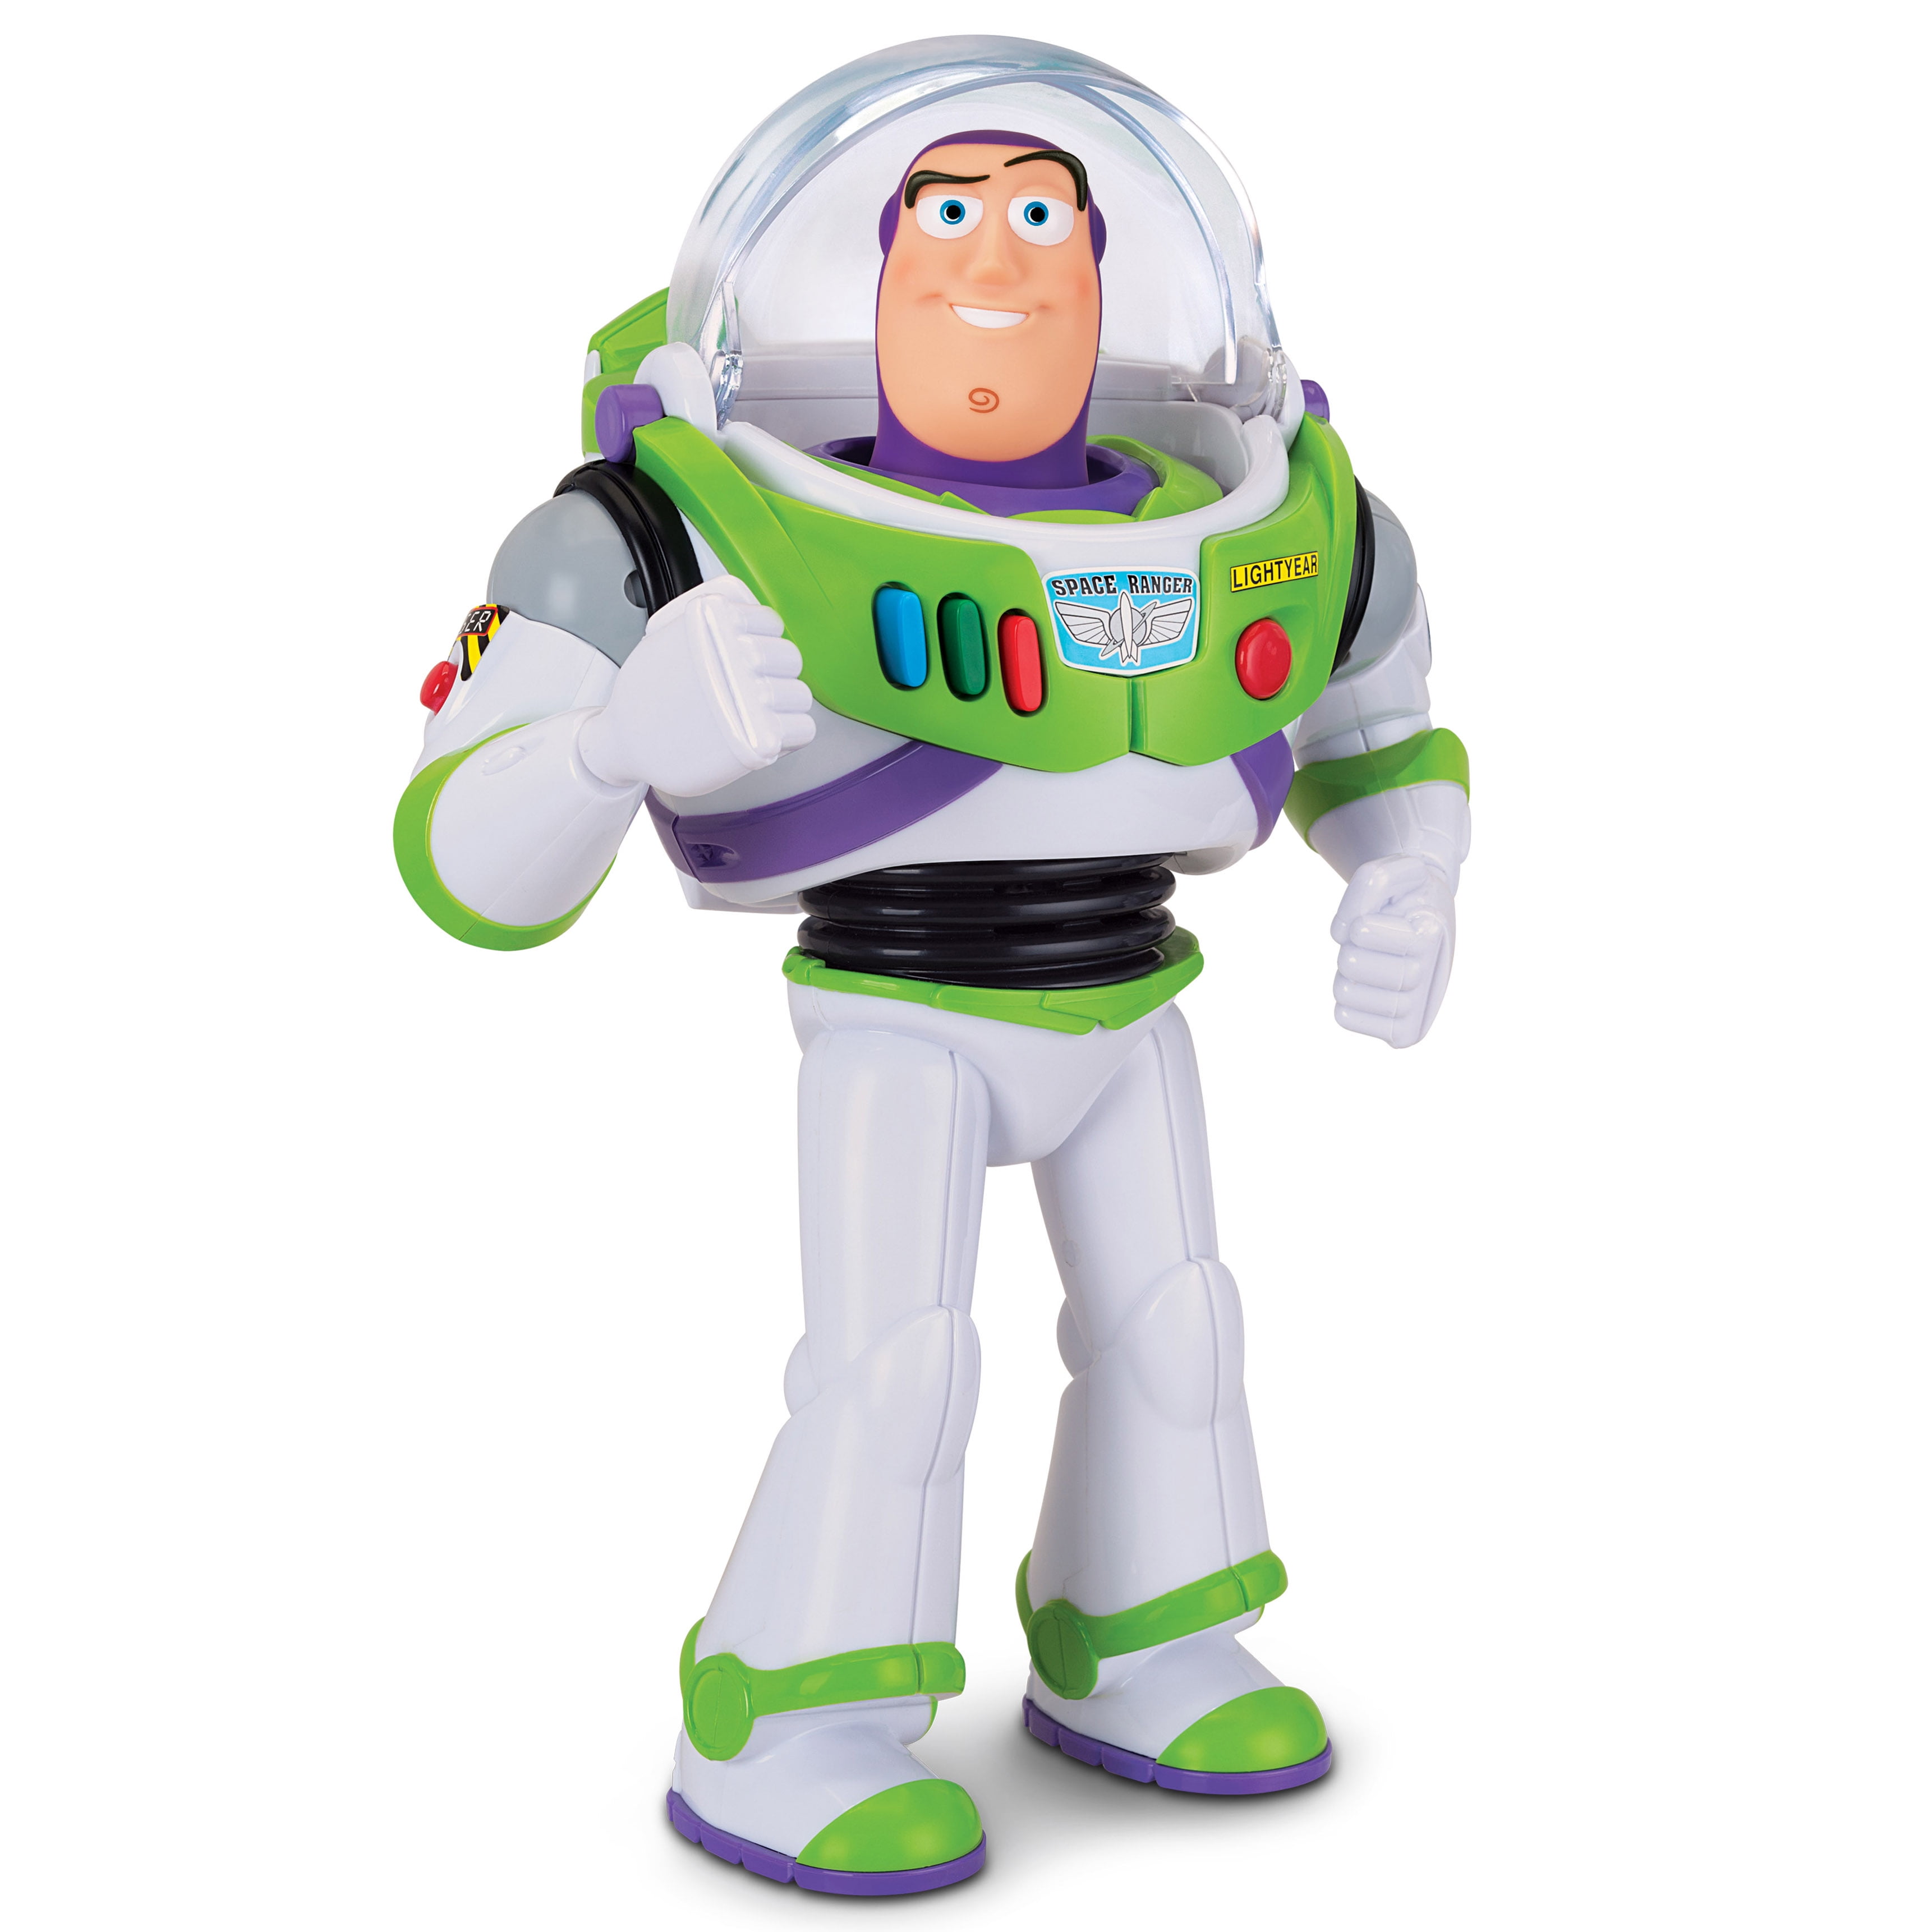 Disney Pixar Toy Story Buzz Lightyear Talking Action Figure